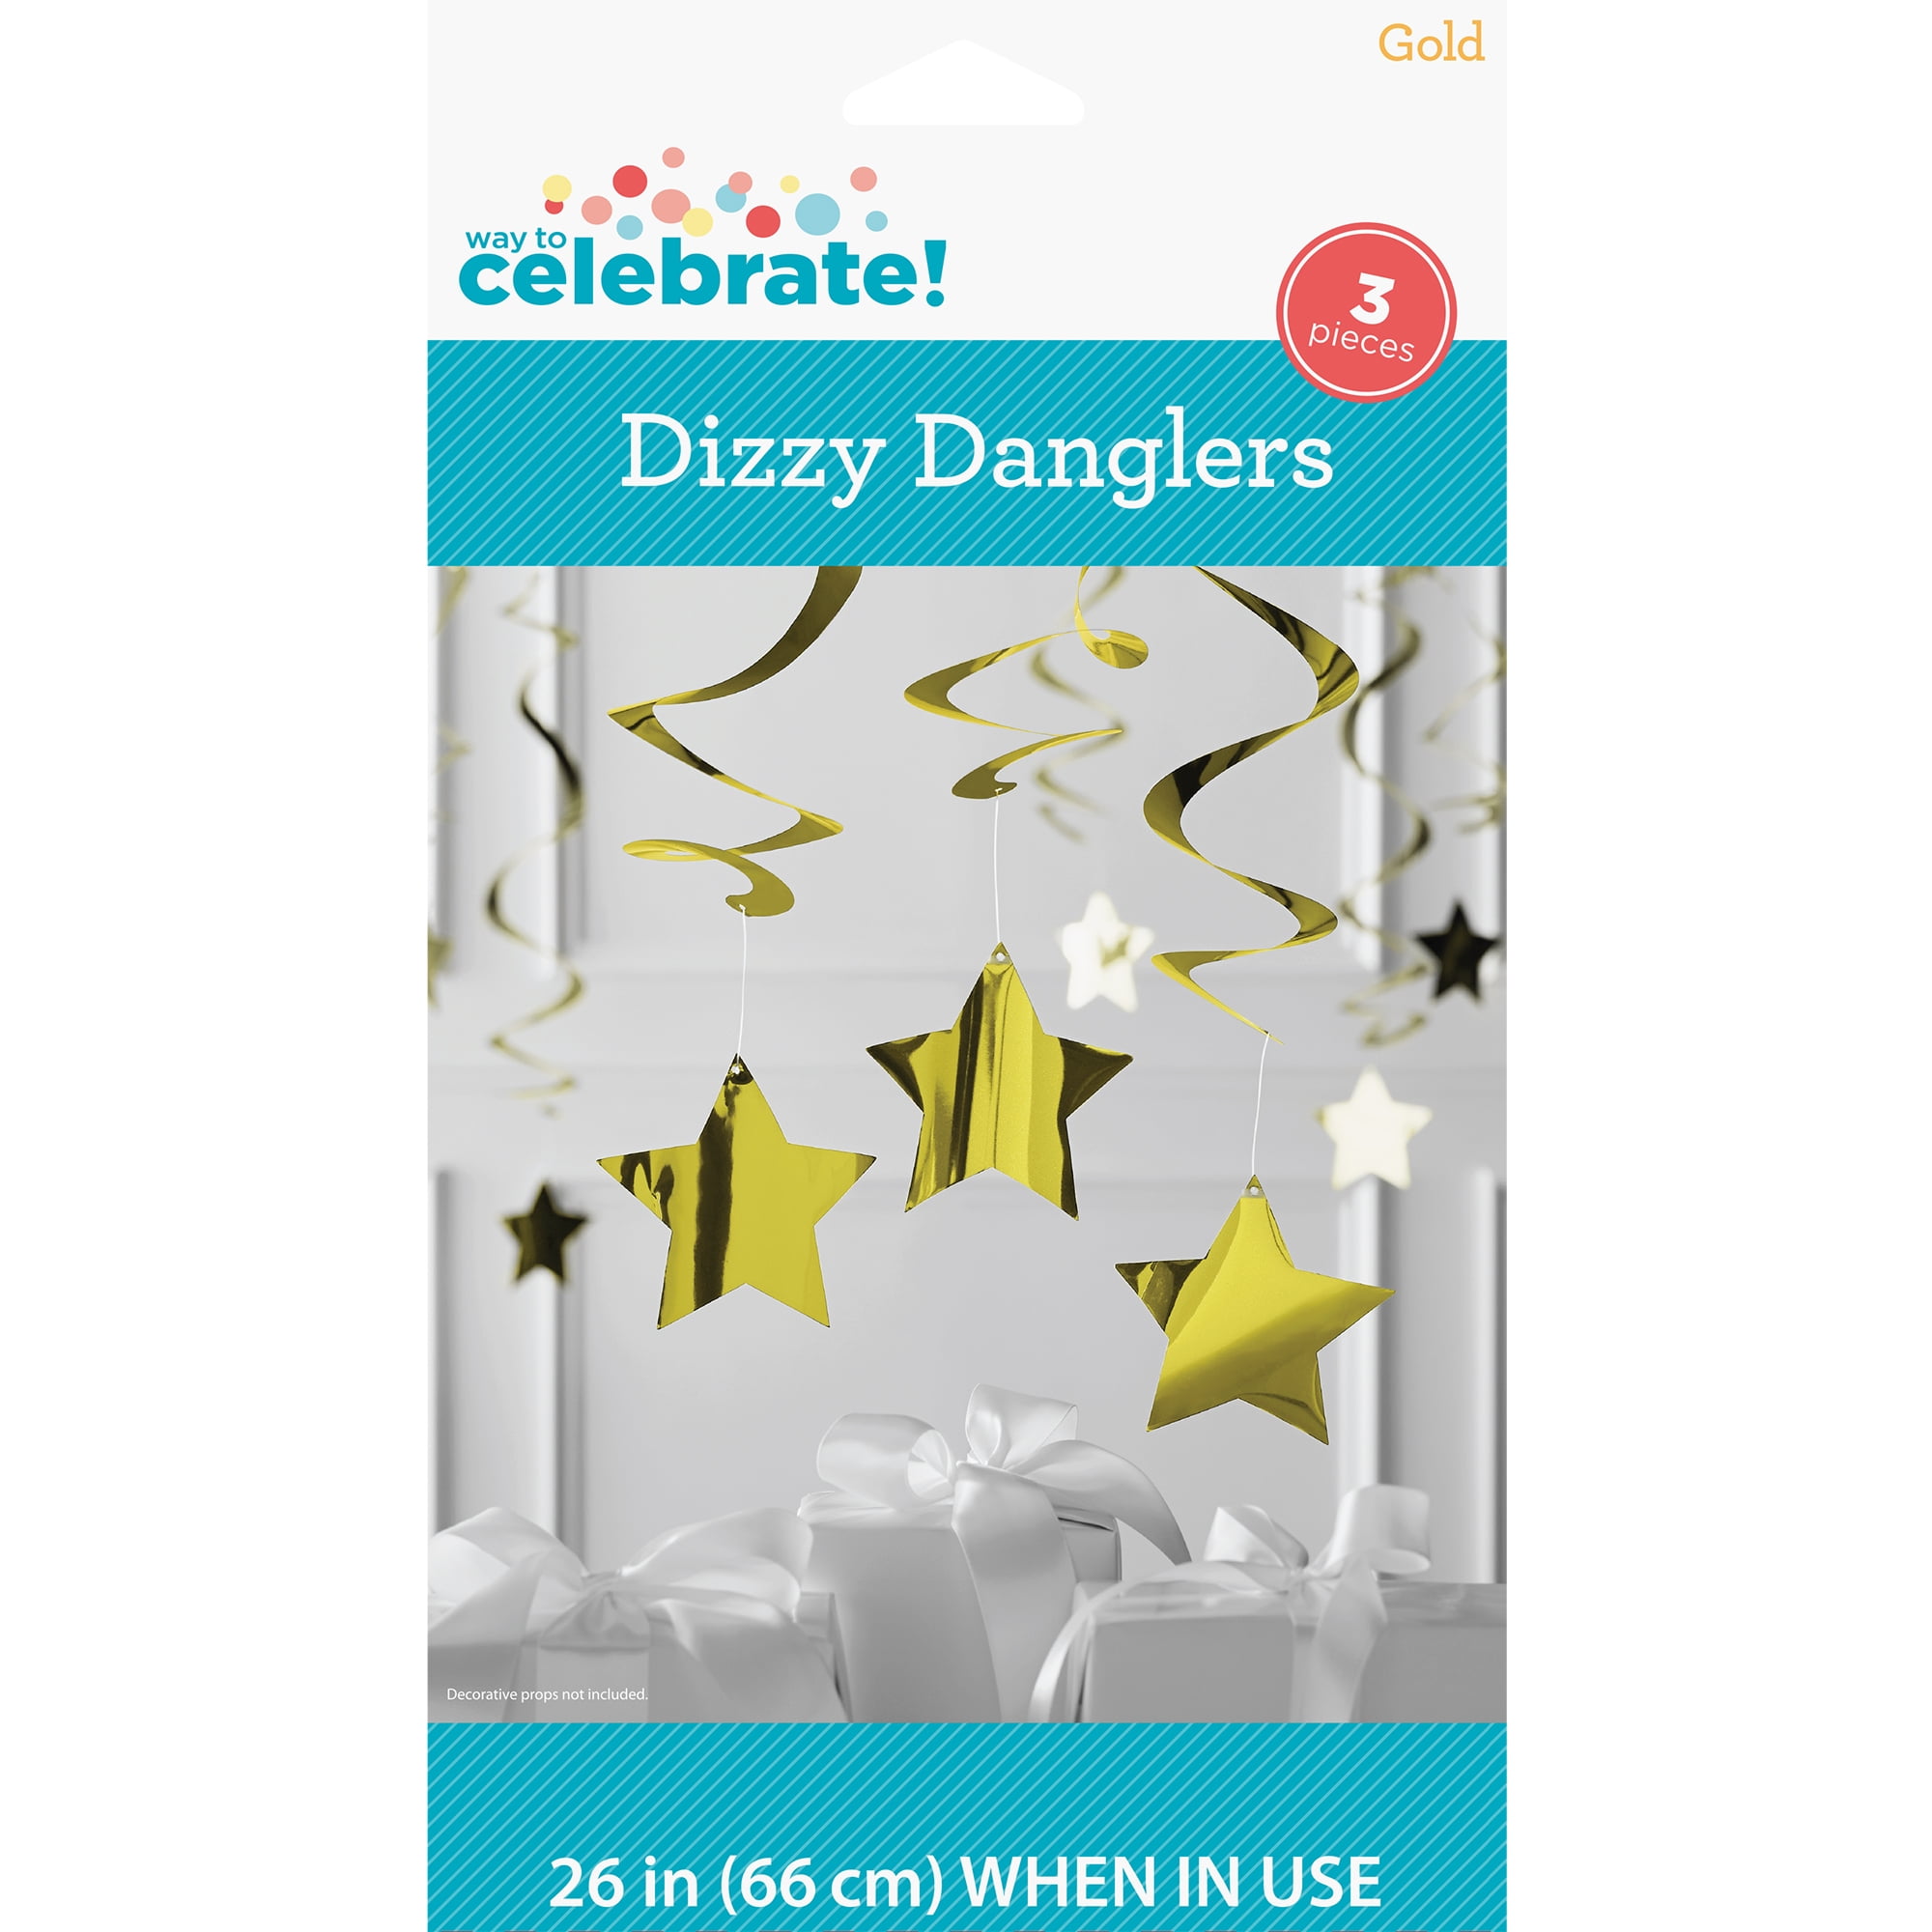 Way to Celebrate Gold Prismatic Dizzy Danglers 